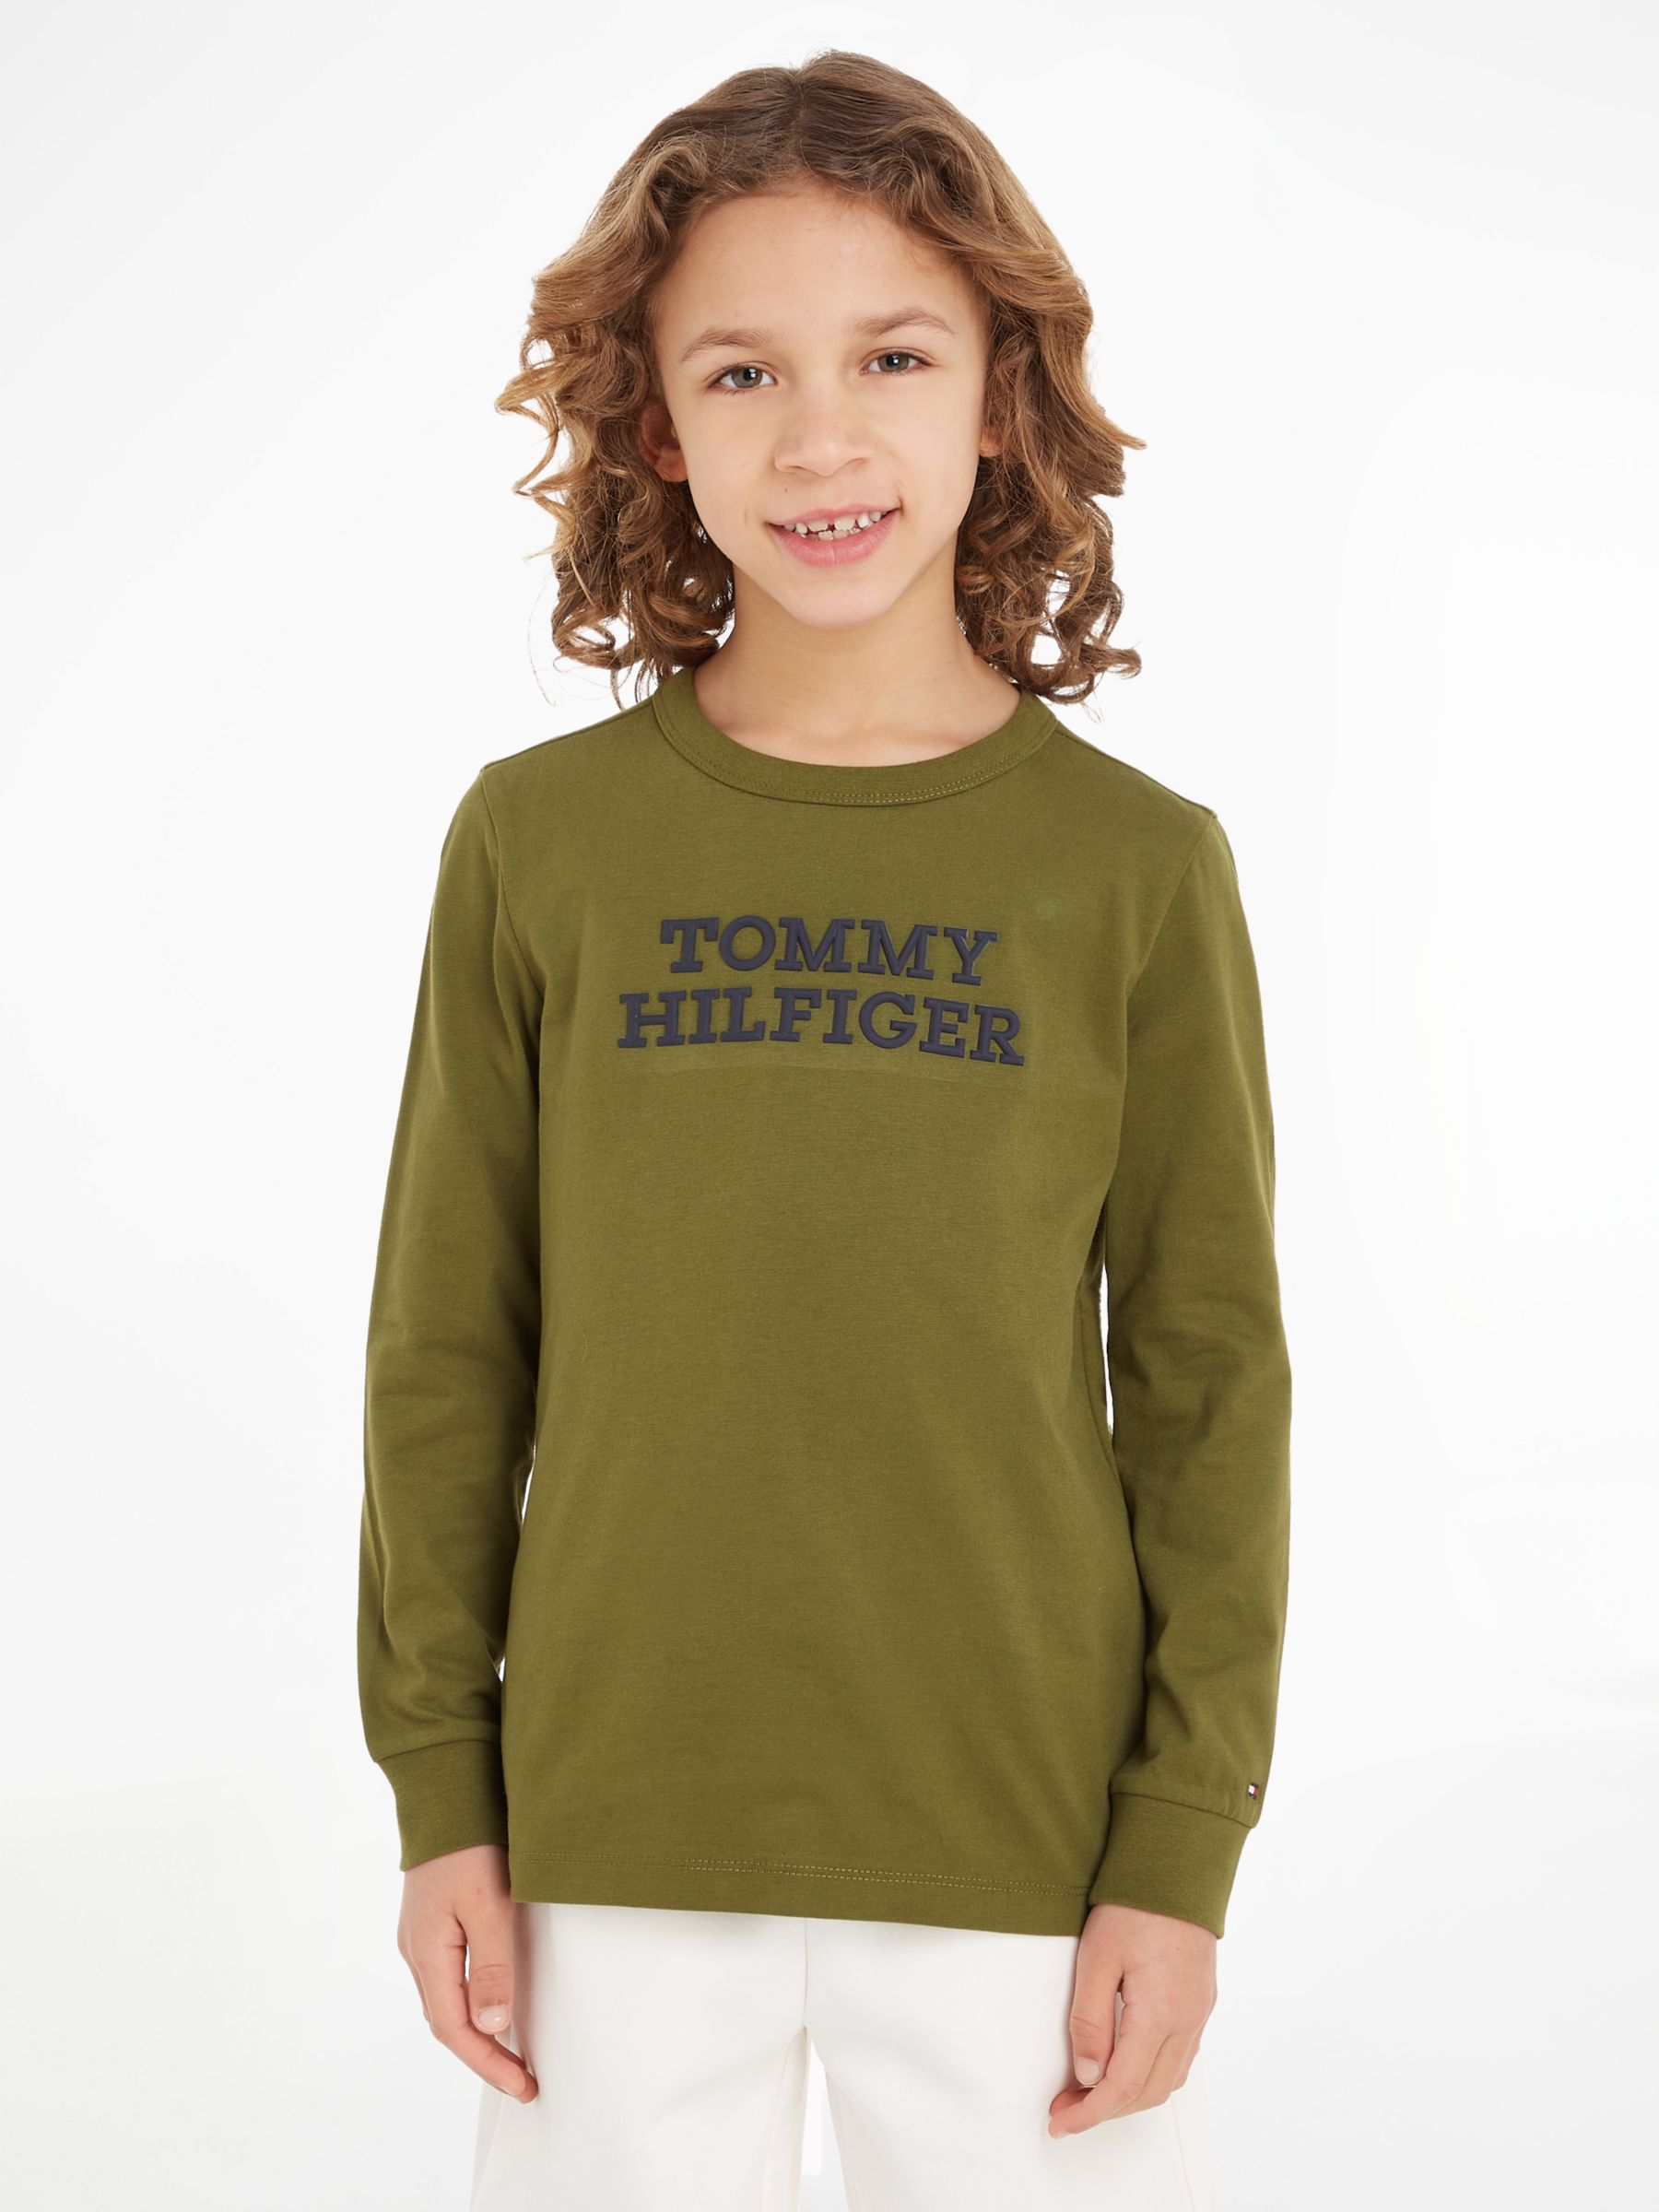 Tommy Hilfiger Kids' Raised Logo Long Sleeve T-Shirt, Putting Green, 3 years